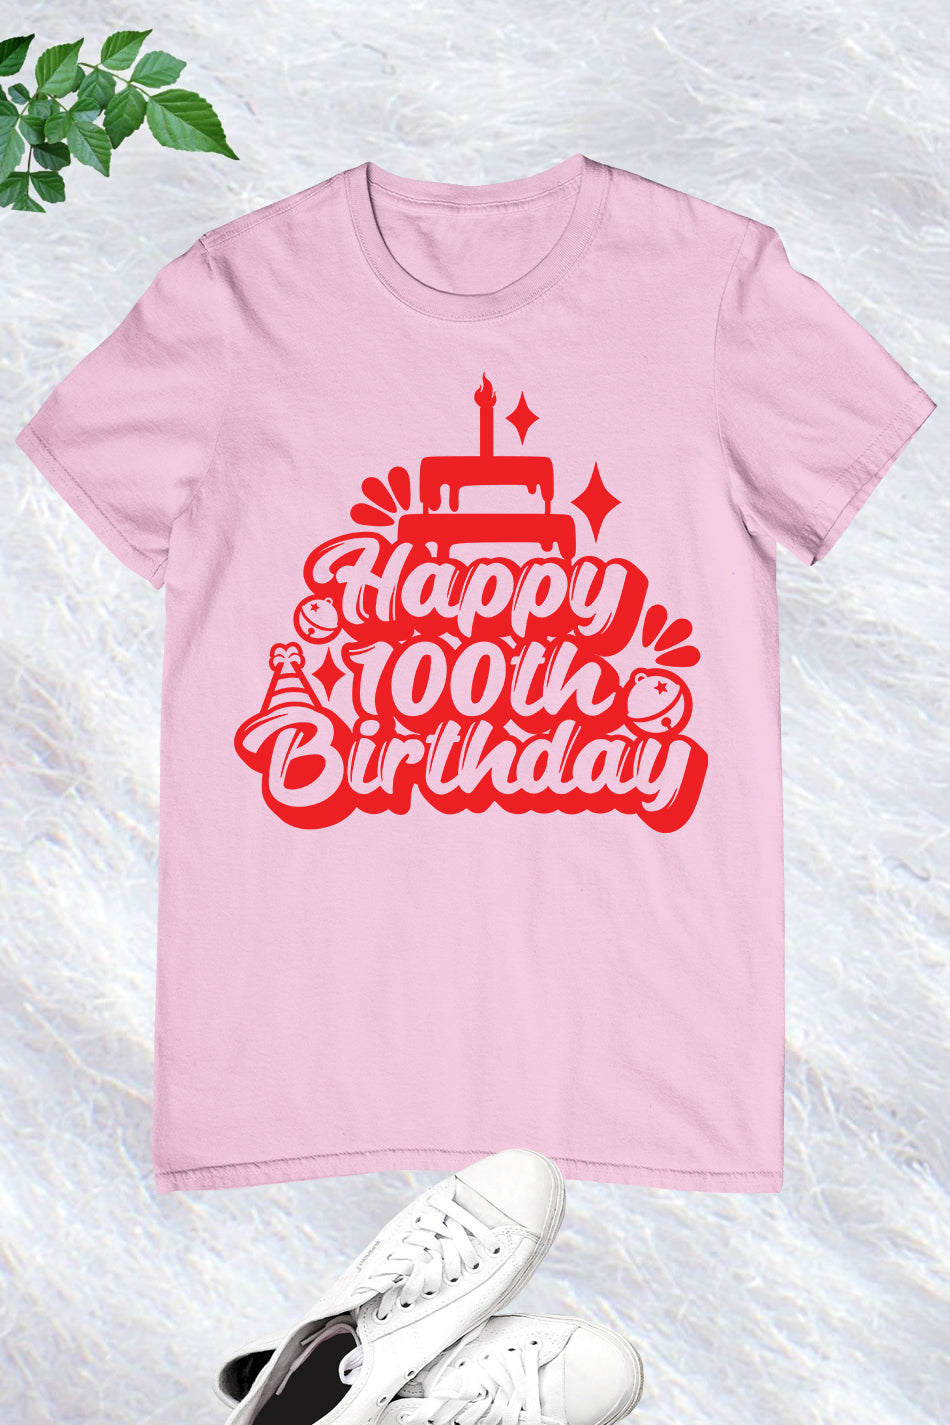 Happy 100th Birthday Shirt